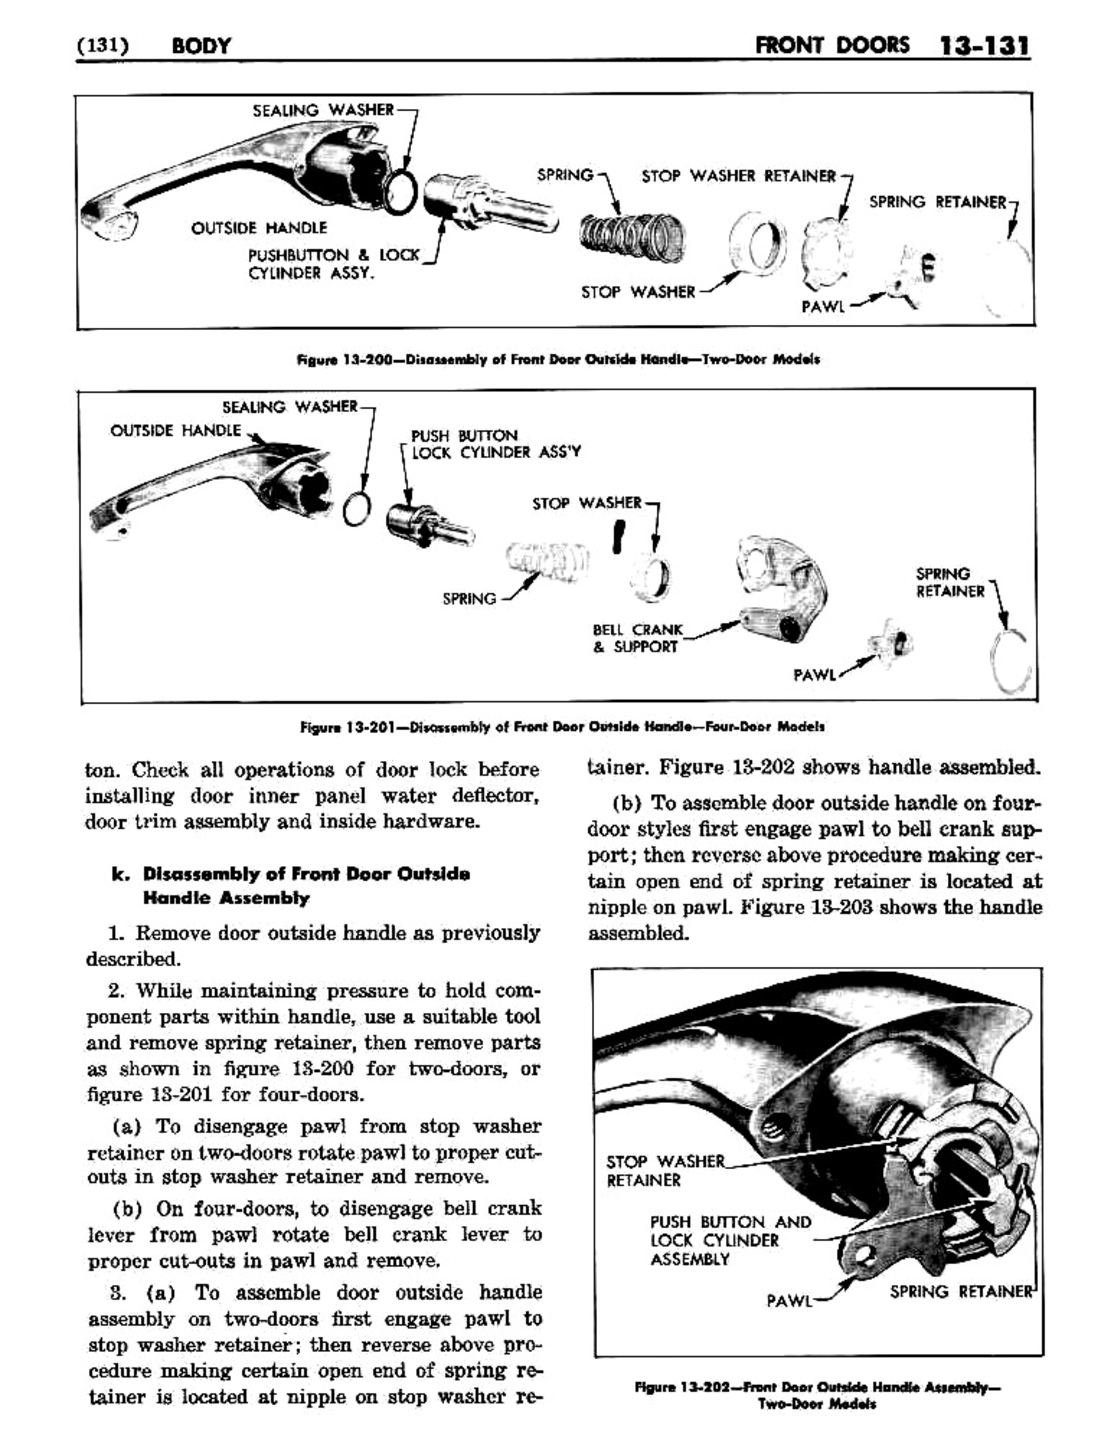 n_1957 Buick Body Service Manual-133-133.jpg